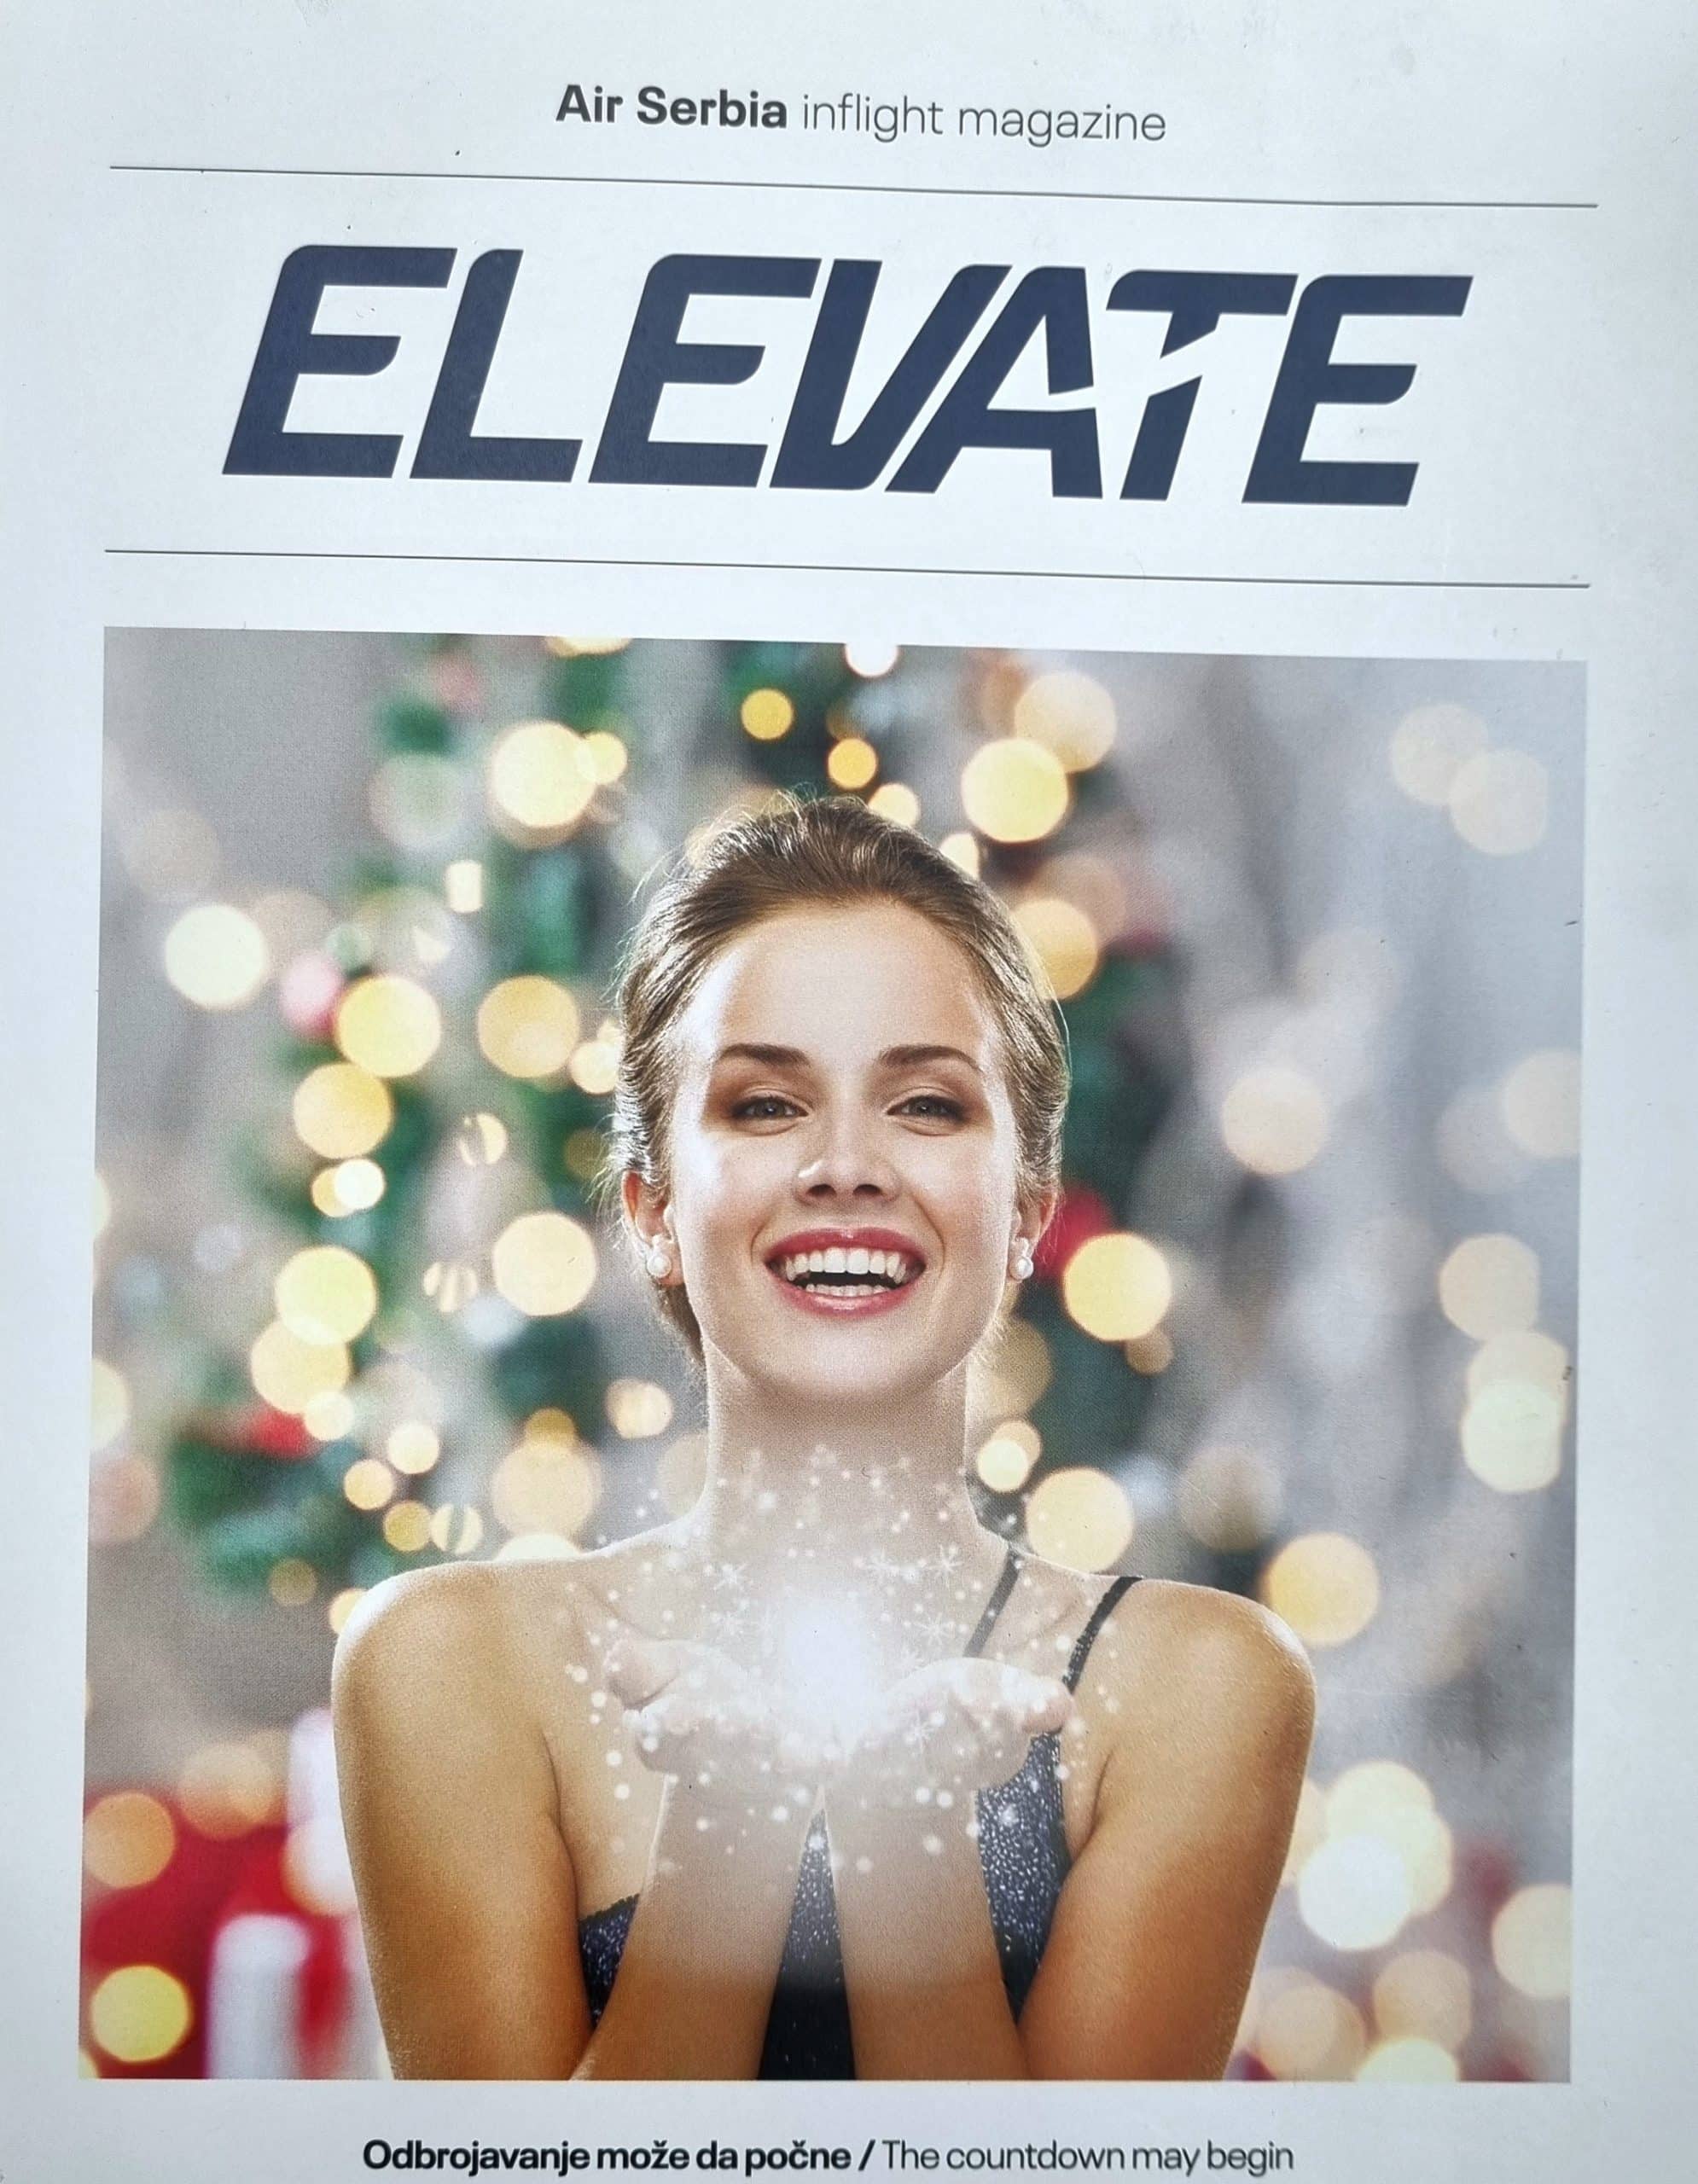 Elevate magazine air serbia